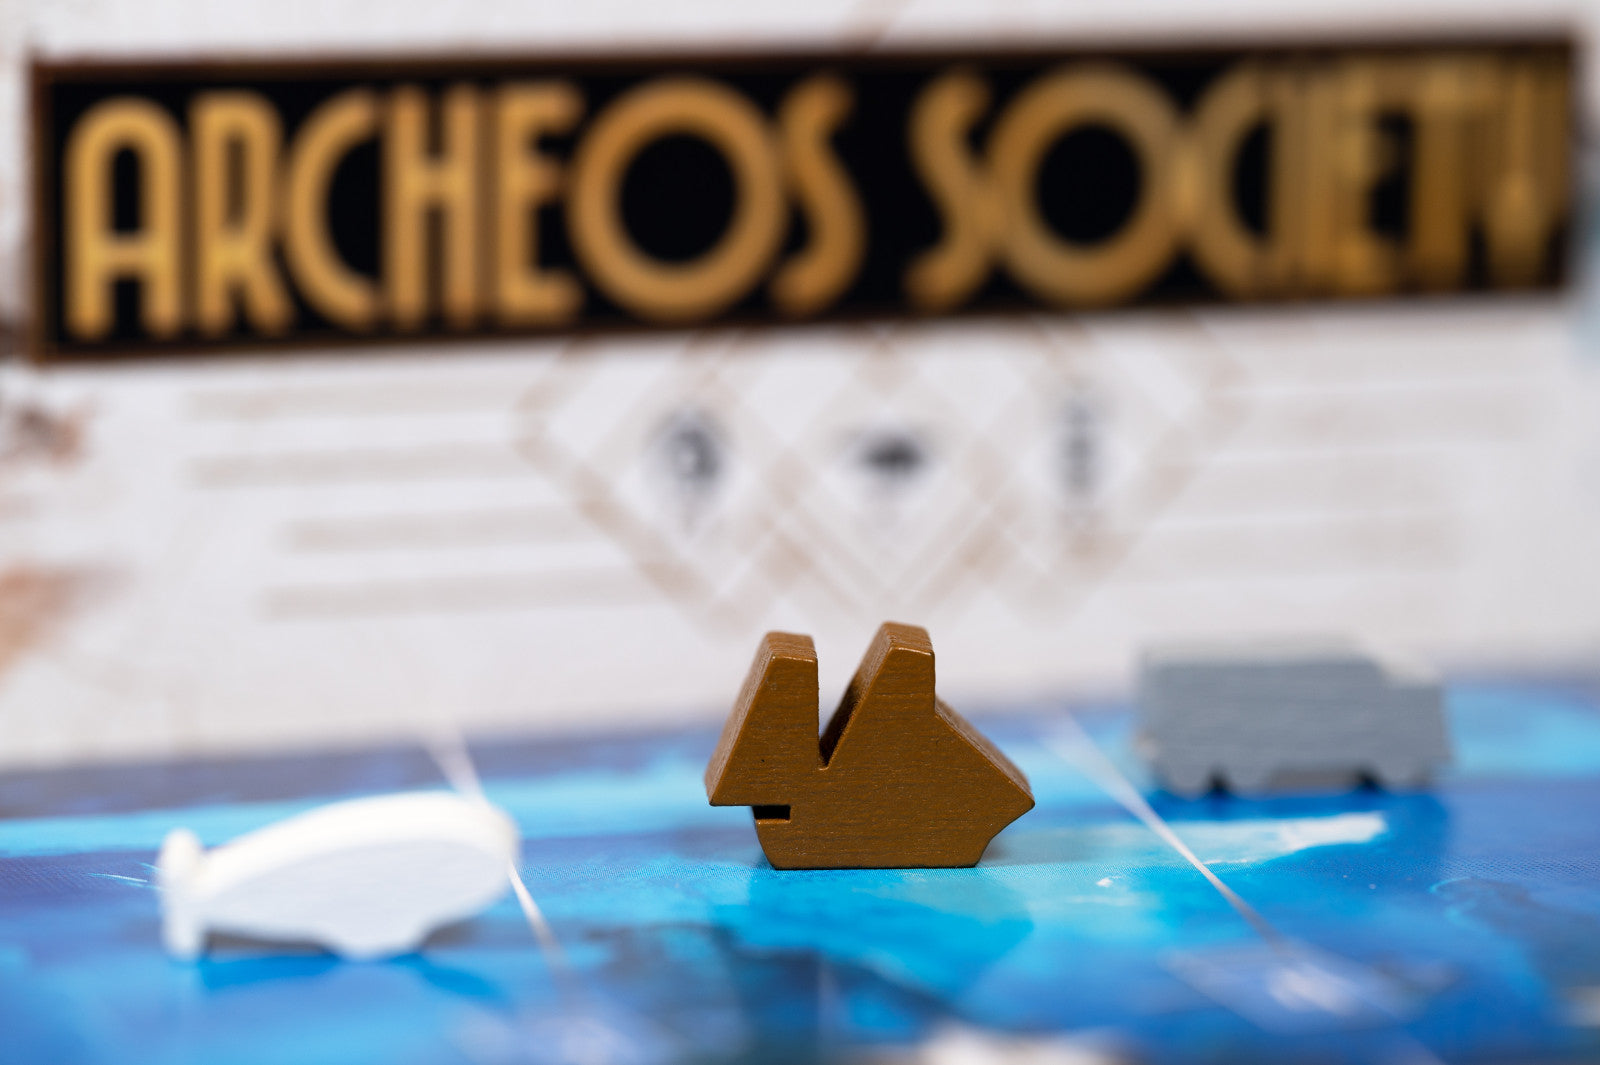 Archeos Society - Toybox Tales